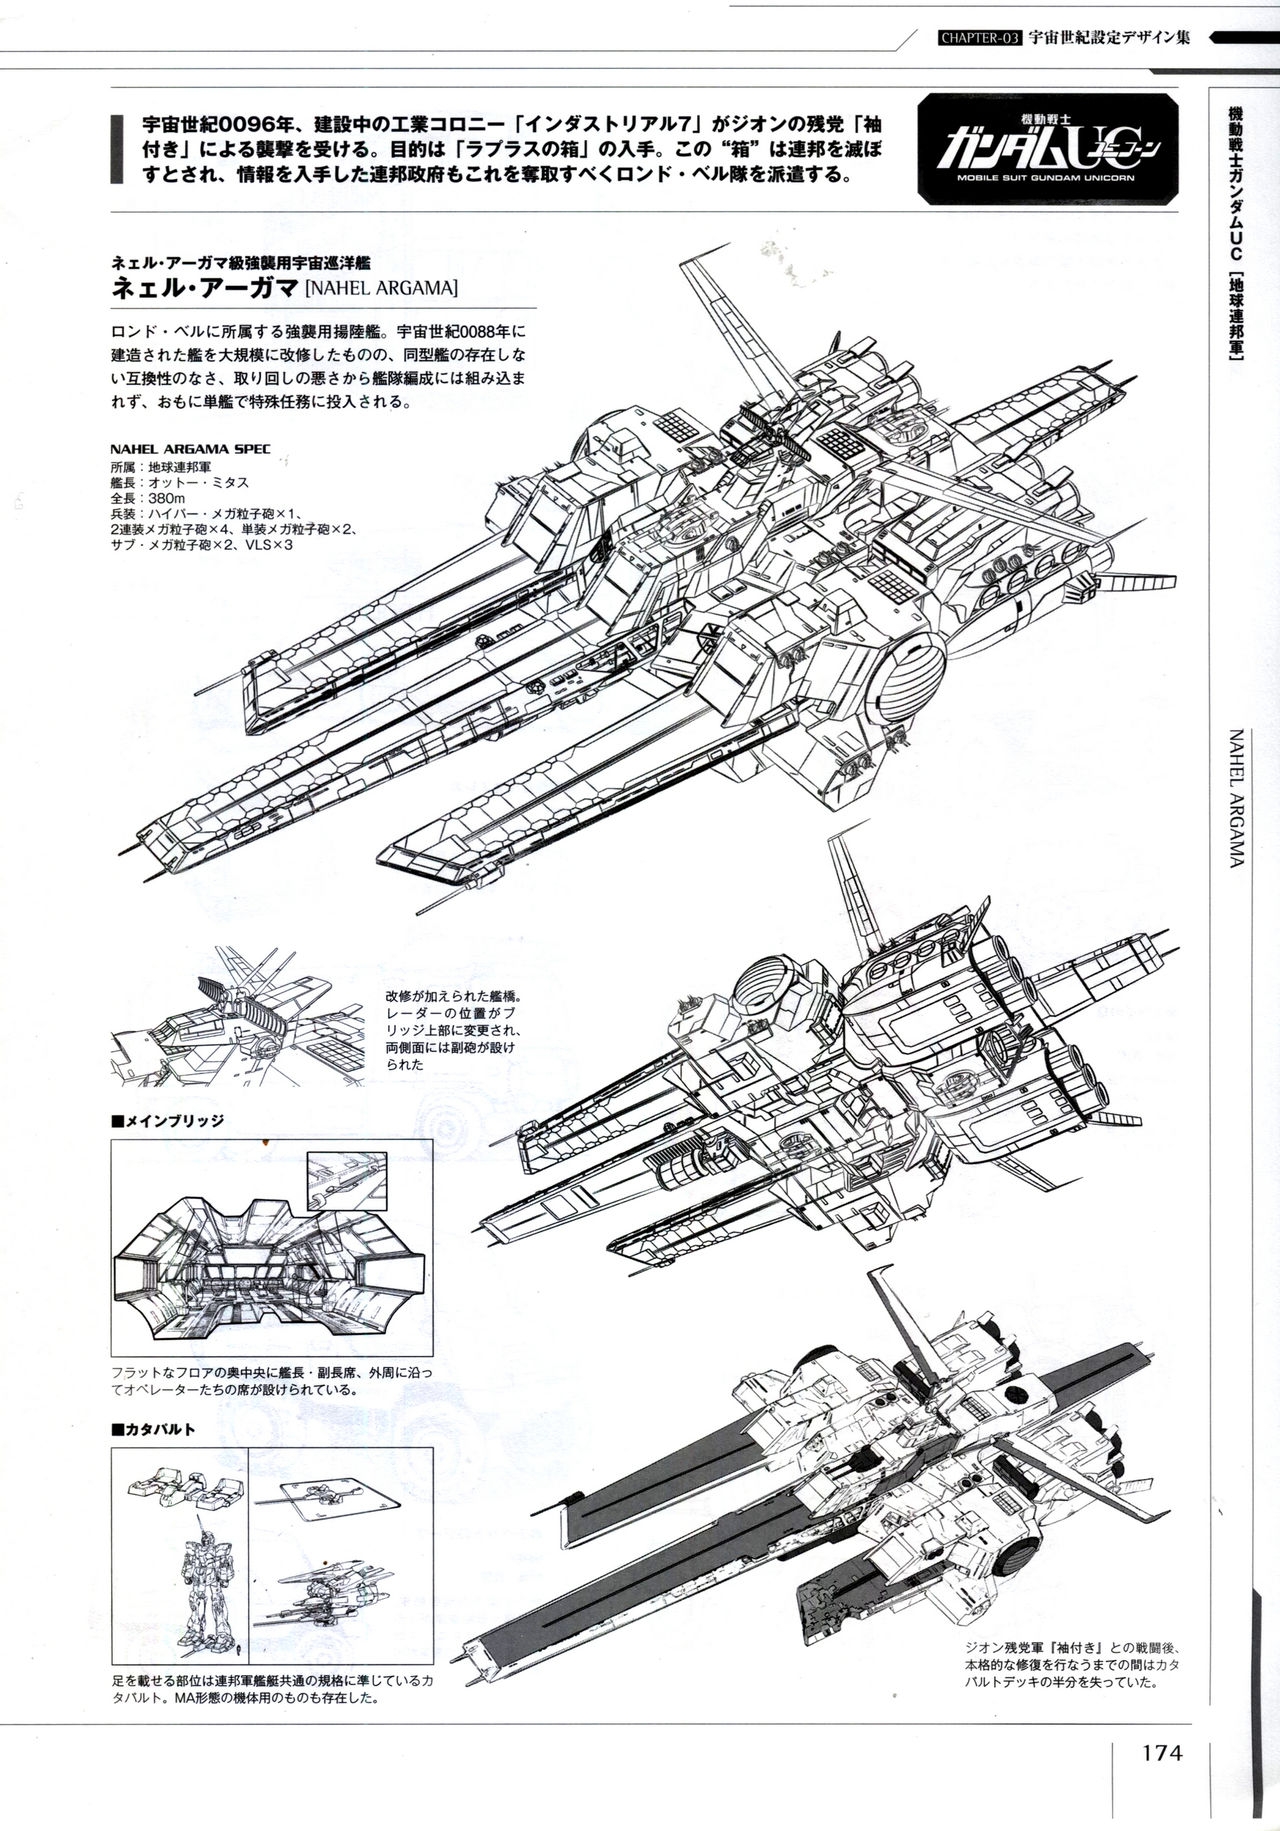 Mobile Suit Gundam - Ship & Aerospace Plane Encyclopedia - Revised Edition 179